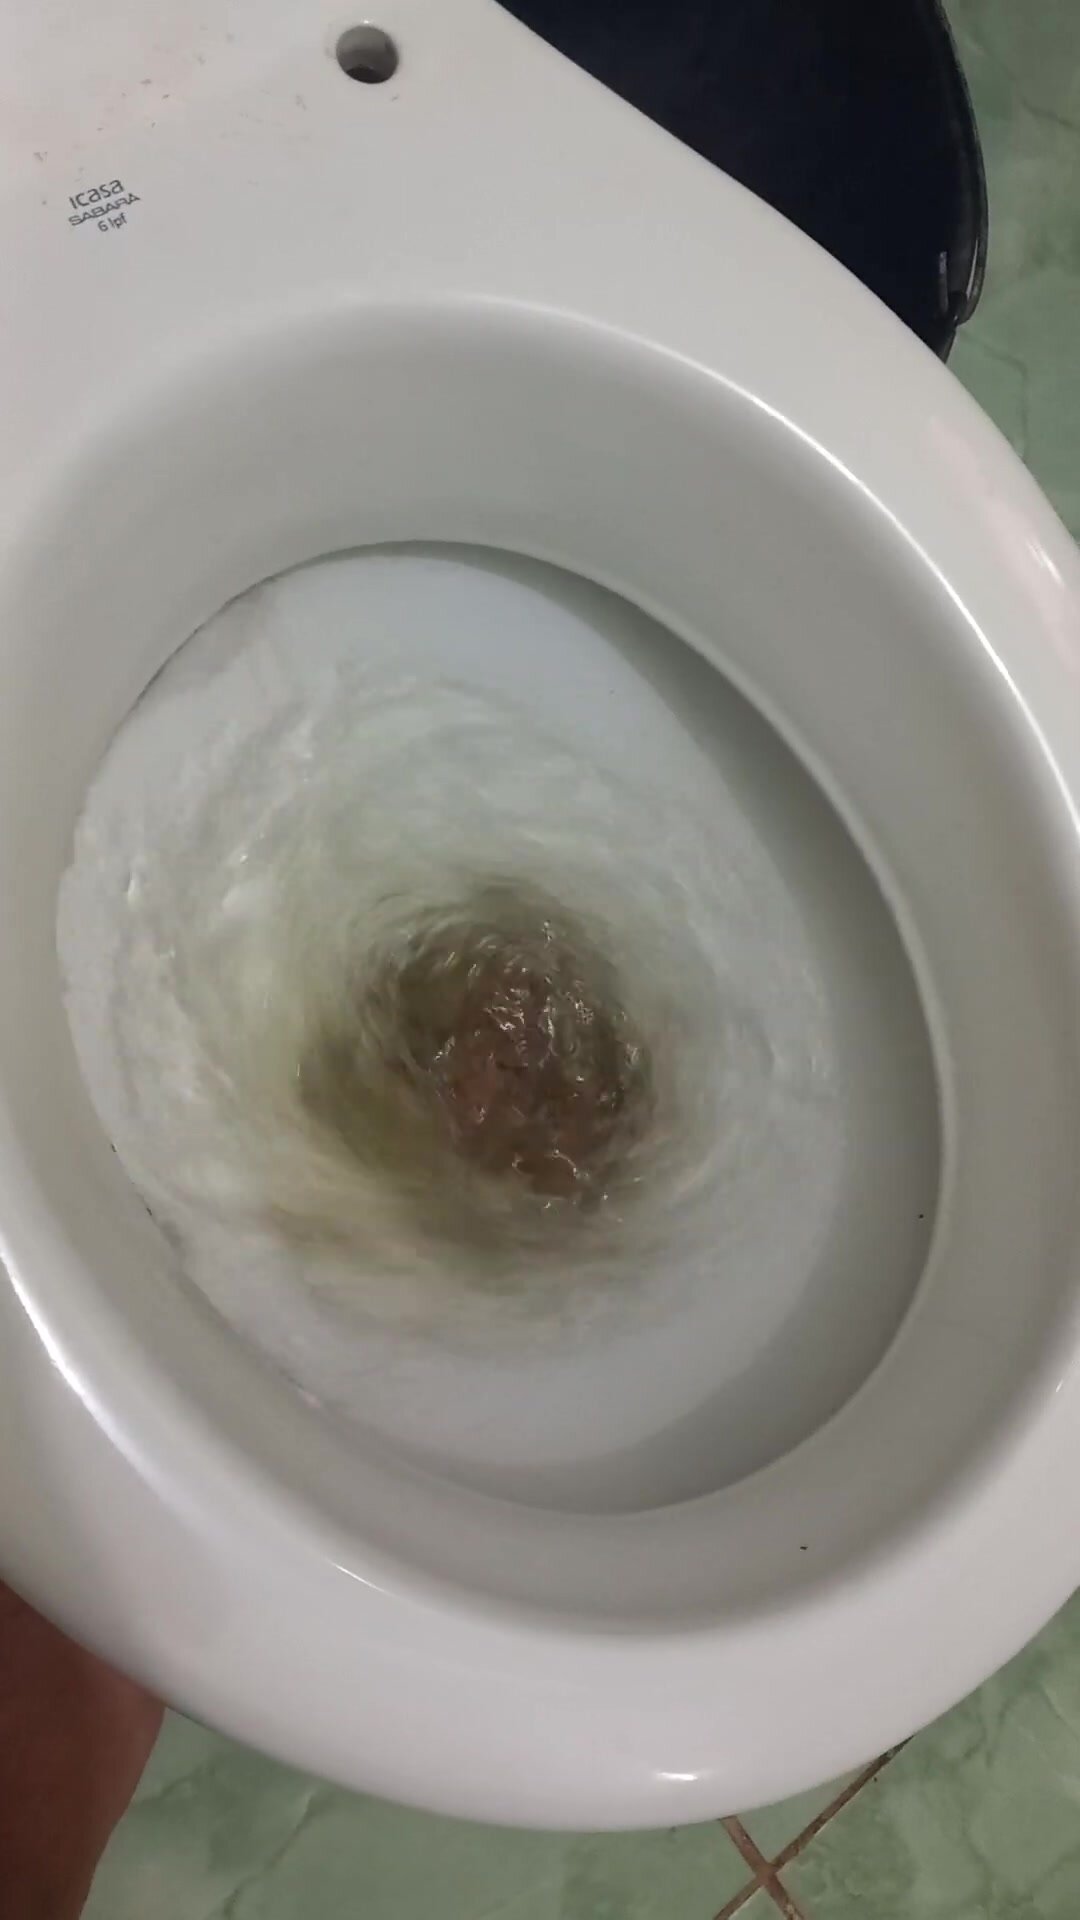 Woman tries to flush toilet, but feces won't go down